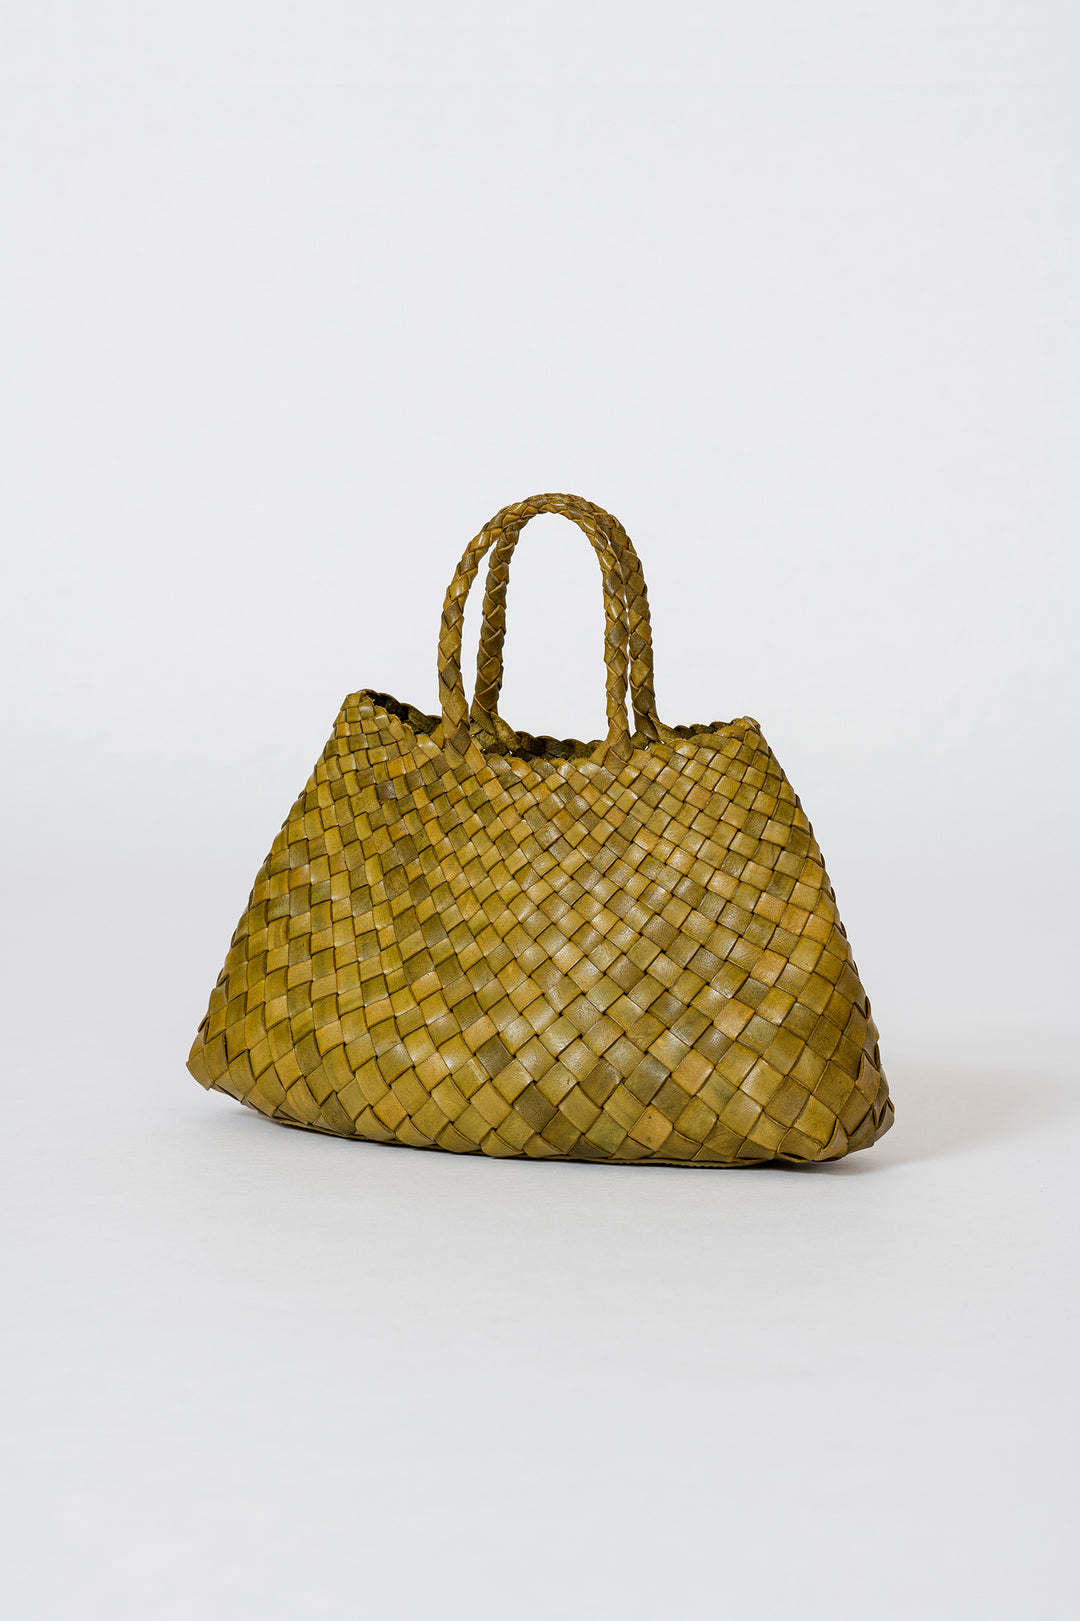 Dragon Diffusion woven leather bag handmade - Santa Croce Small Dark Green